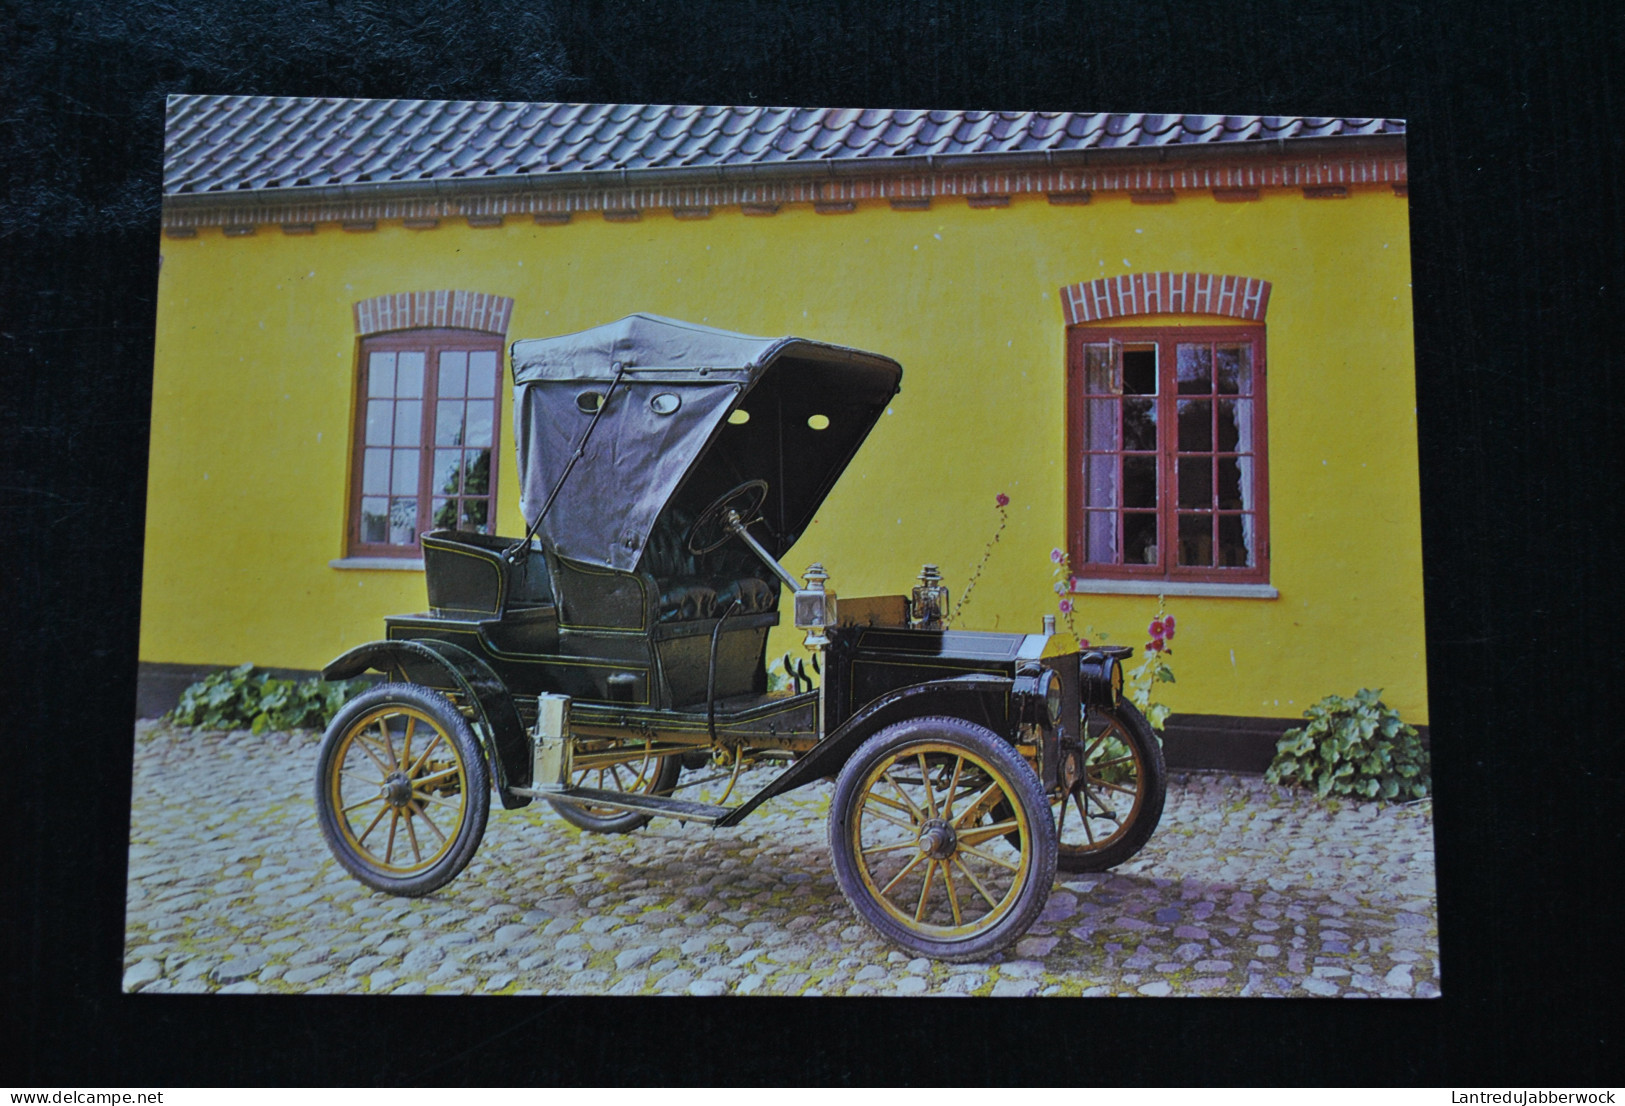 4 GRANDES CARTES (15 x 21 cm) DE DION BOUTON 1900 - 1903 - RENAULT 8 CV 1907 - Ford Modell N 1906 non circulées